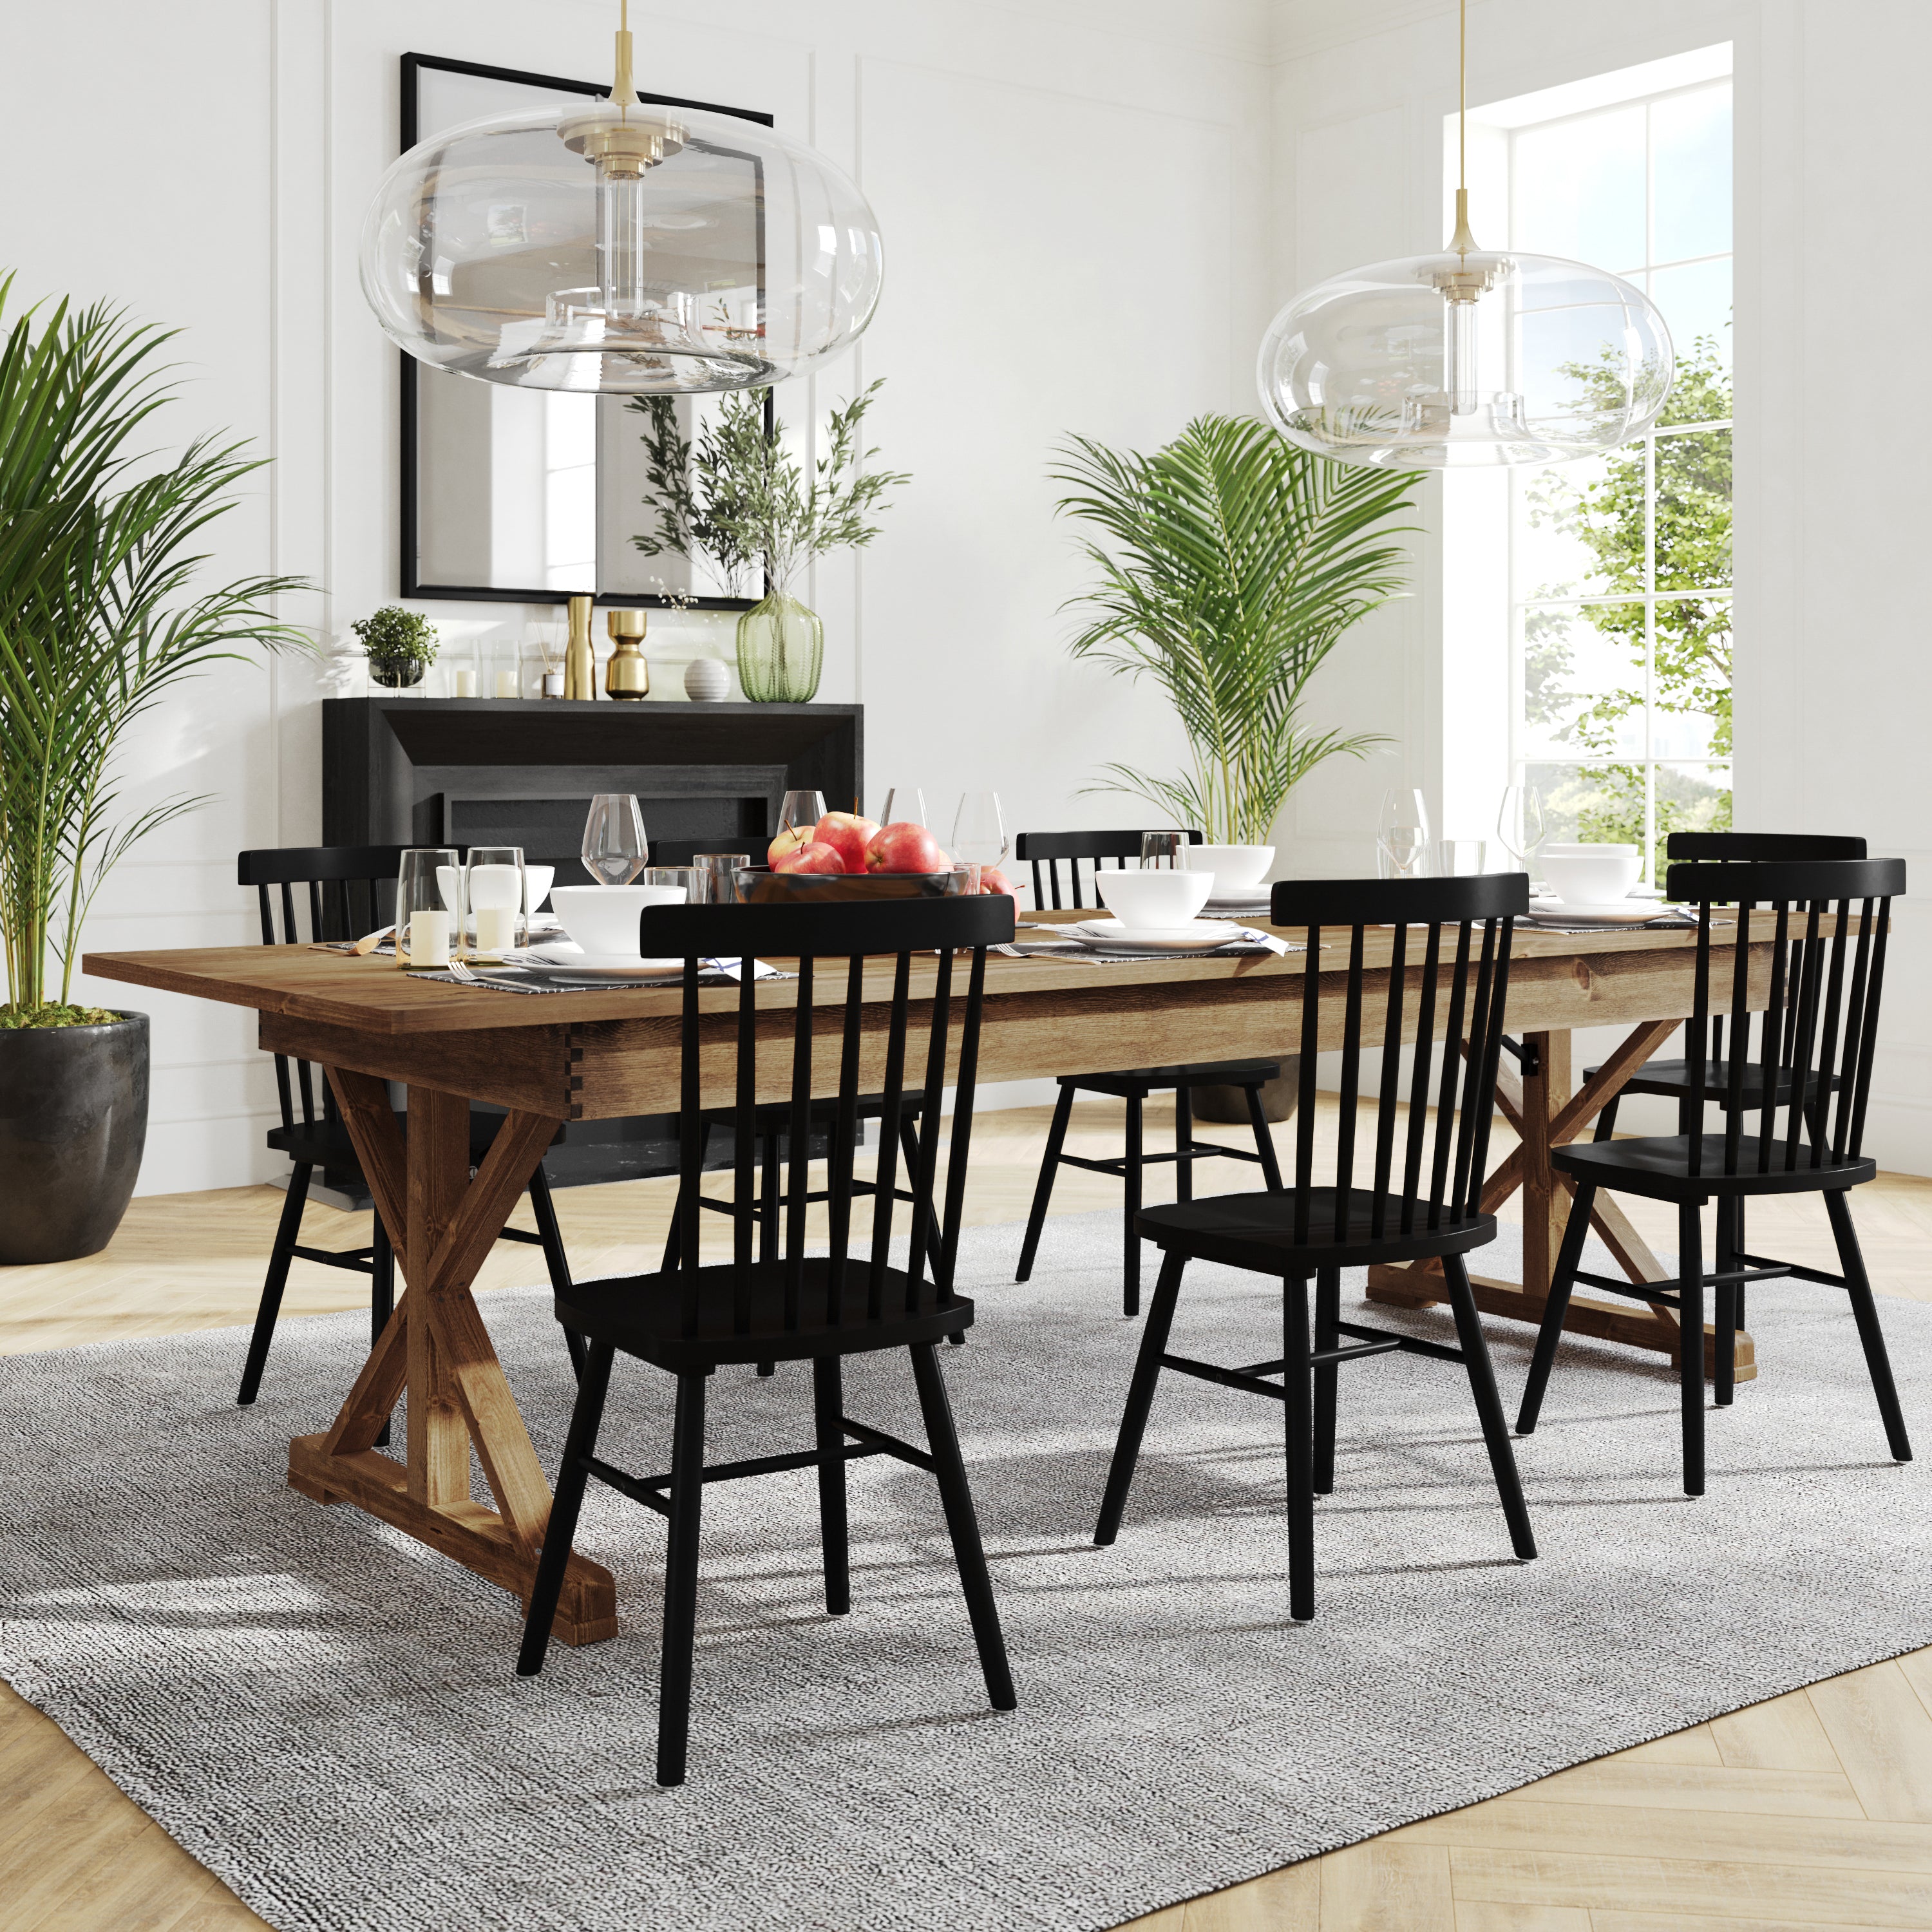 HERCULES 9' x 40" Rectangular Solid Pine Folding Farm Table with X Legs-Farm Table-Flash Furniture-Wall2Wall Furnishings